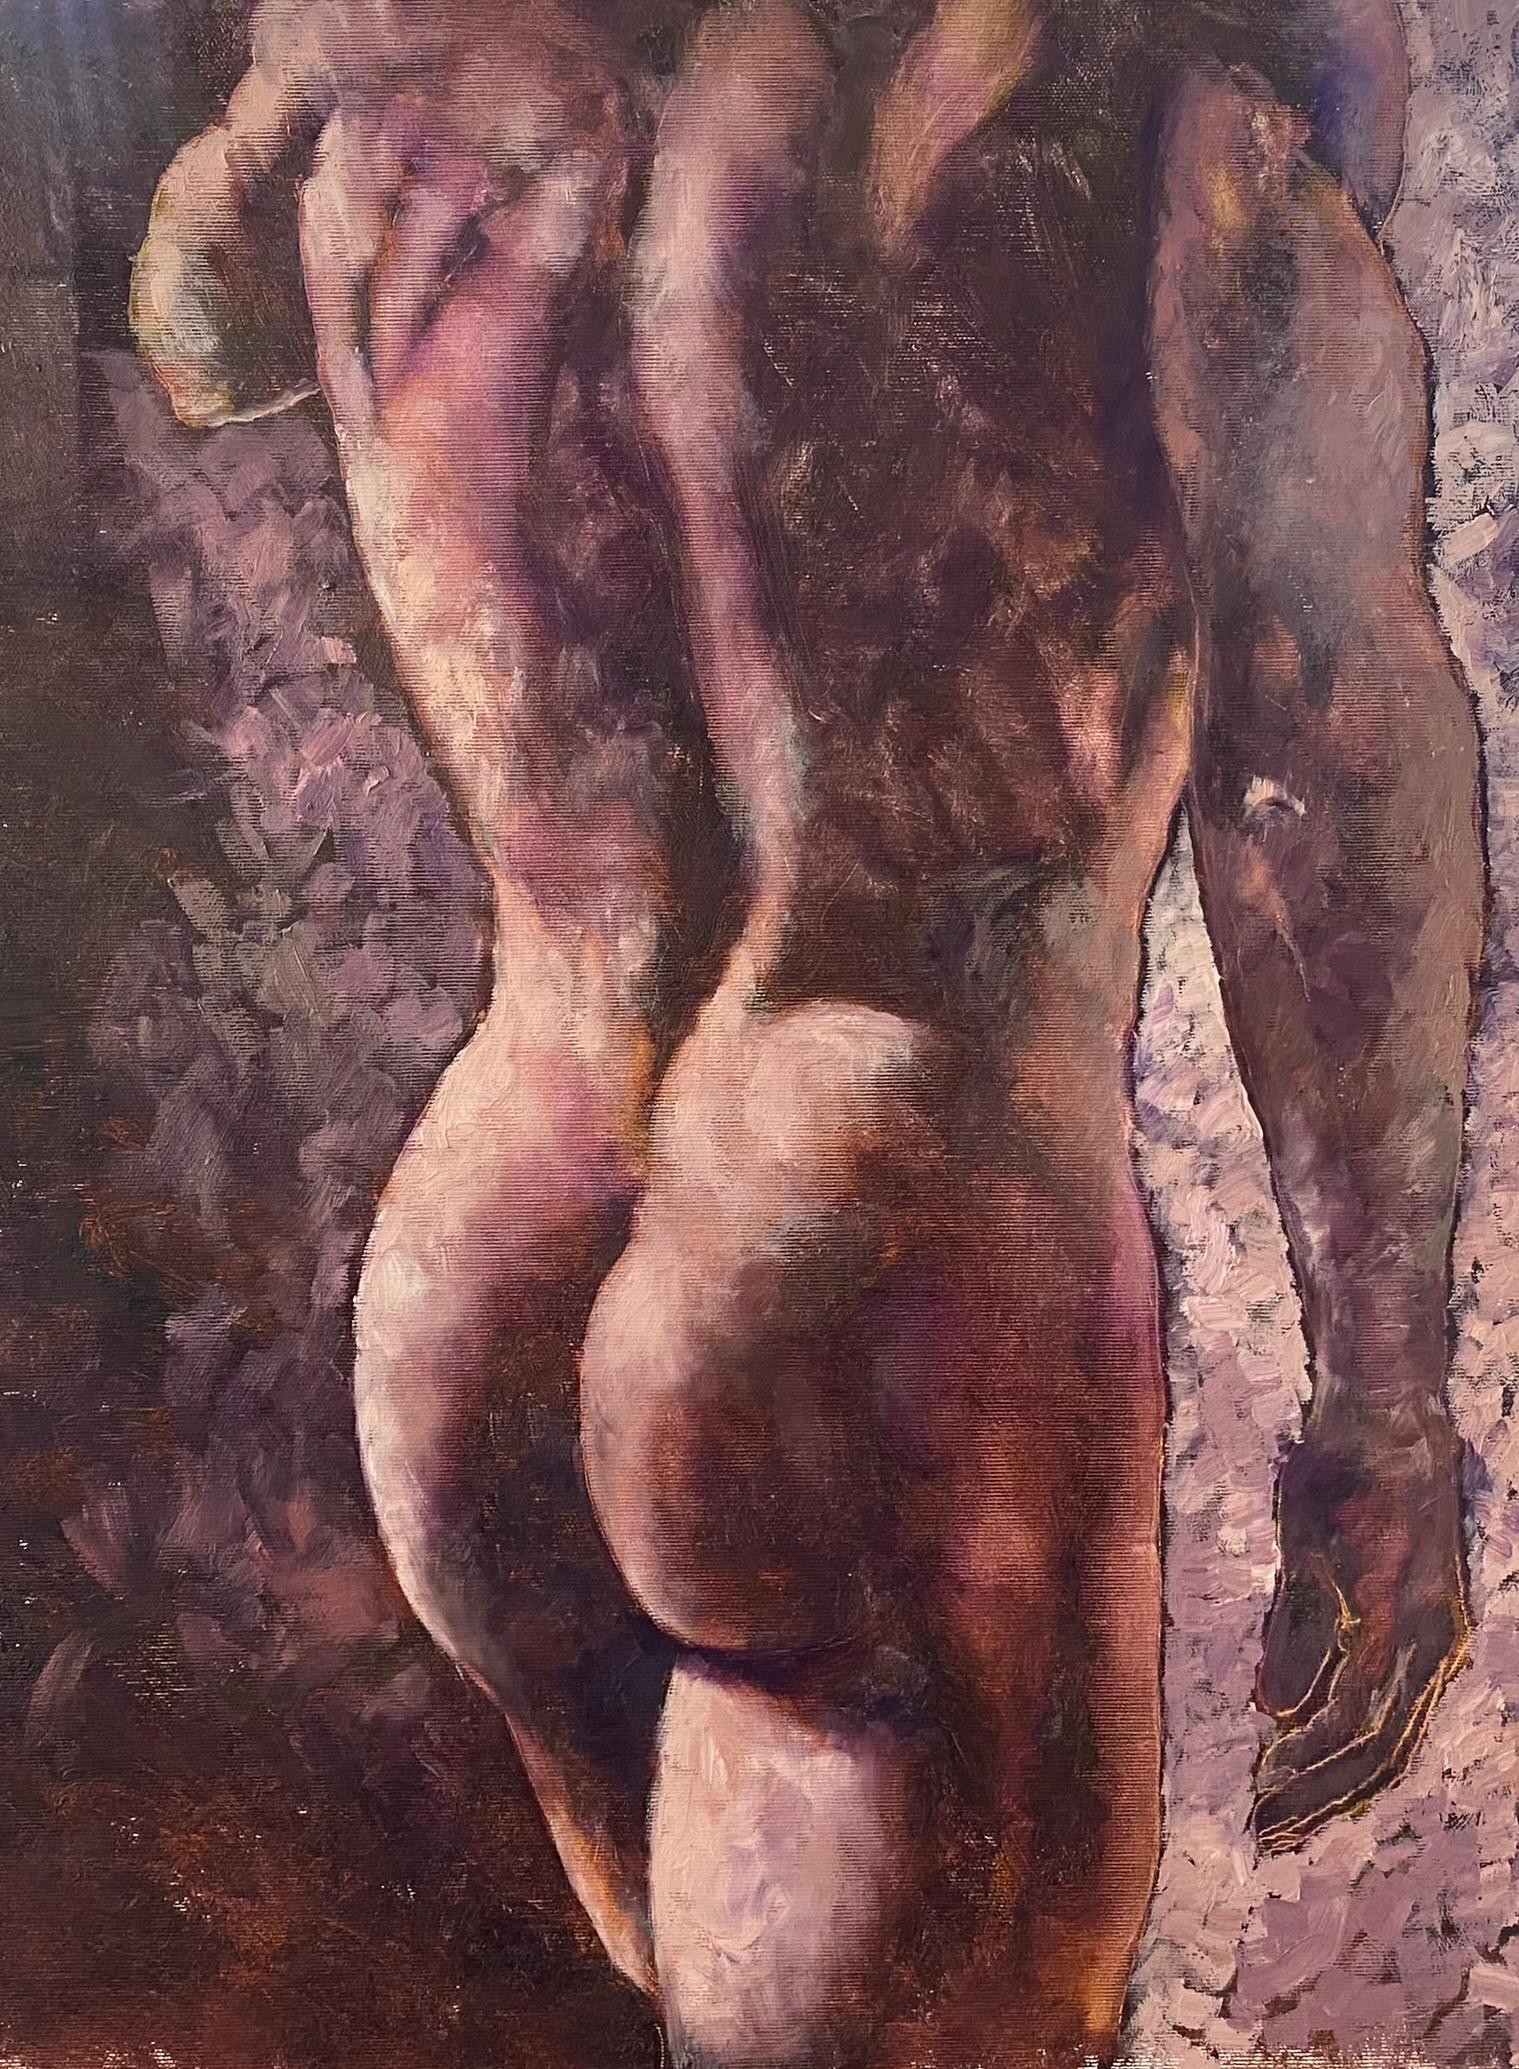 Dasha Pogodina Nude Painting - The Power of Seduction